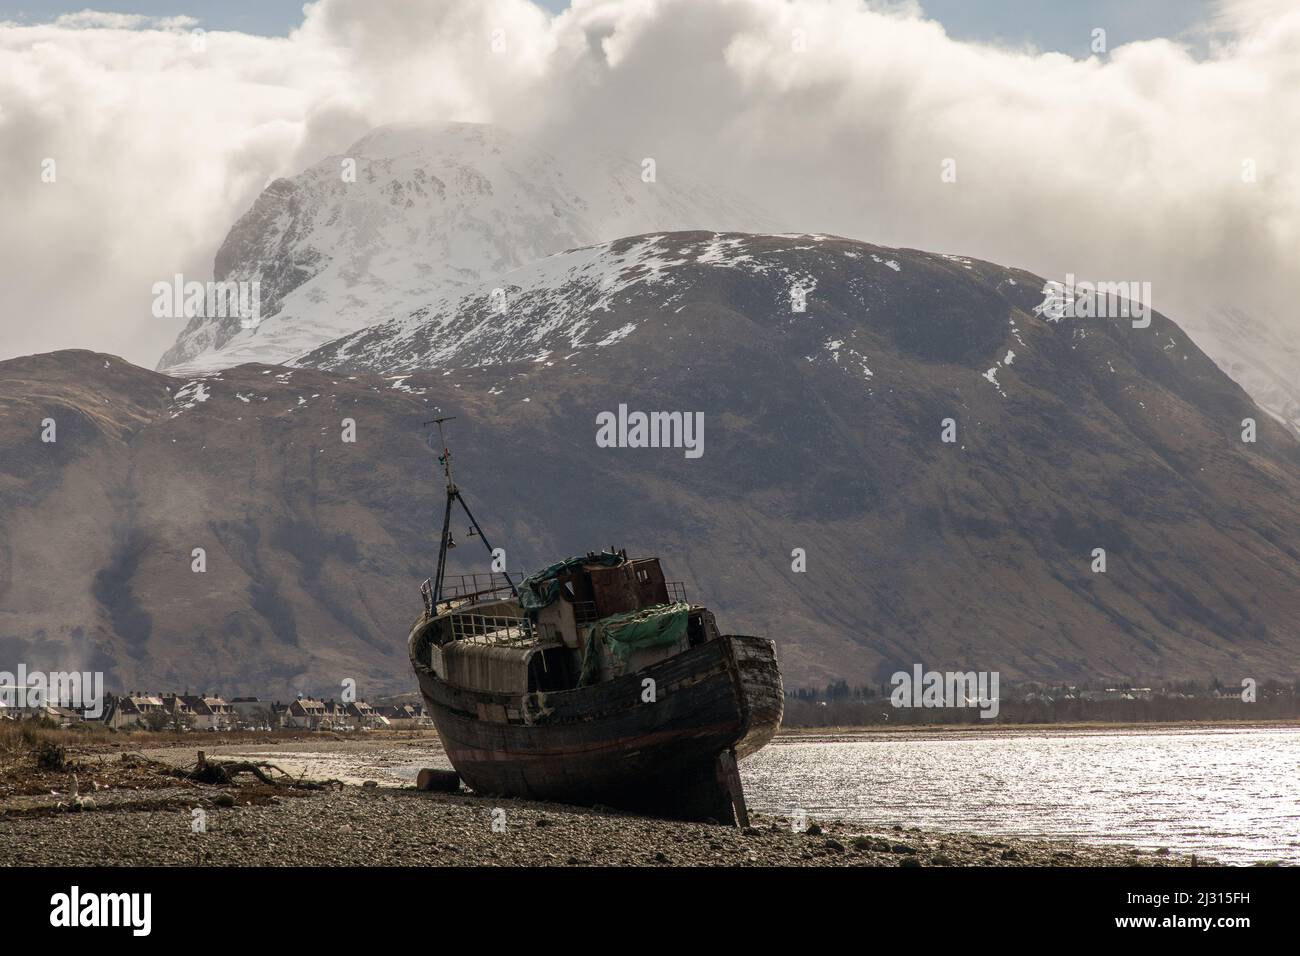 Landed shipwreck, Old Boat of Caol, Loch Eil, Ben Nevis, Scotland, UK Stock Photo